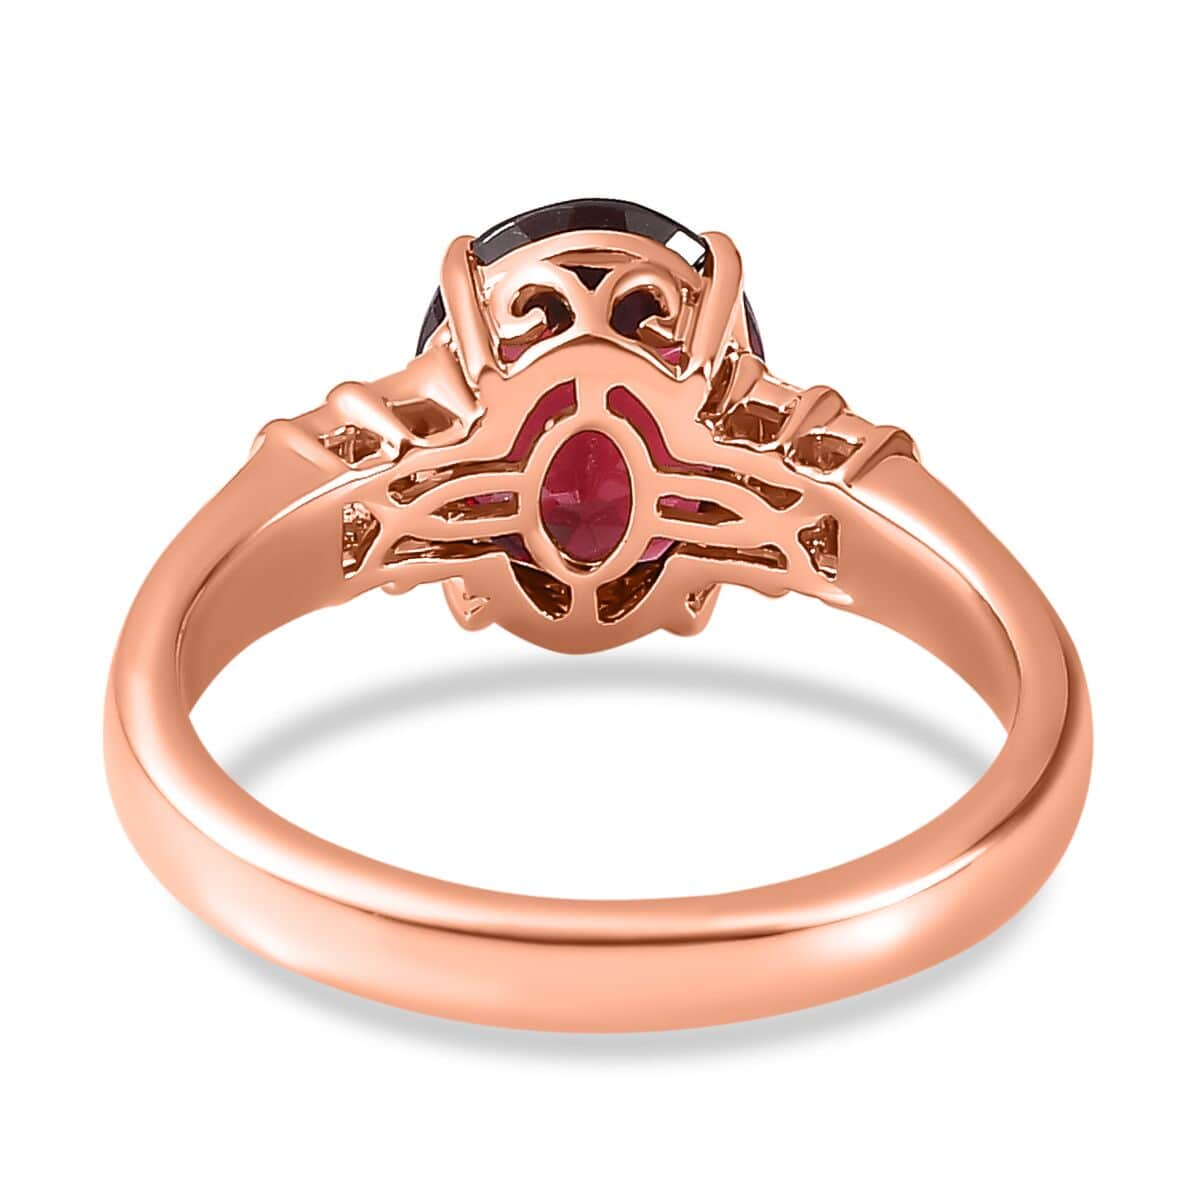 Luxoro 10K Rose Gold Premium Orissa Rhodolite Garnet and G-H I2 Diamond Ring (Size 10.0) 3.20 ctw image number 4